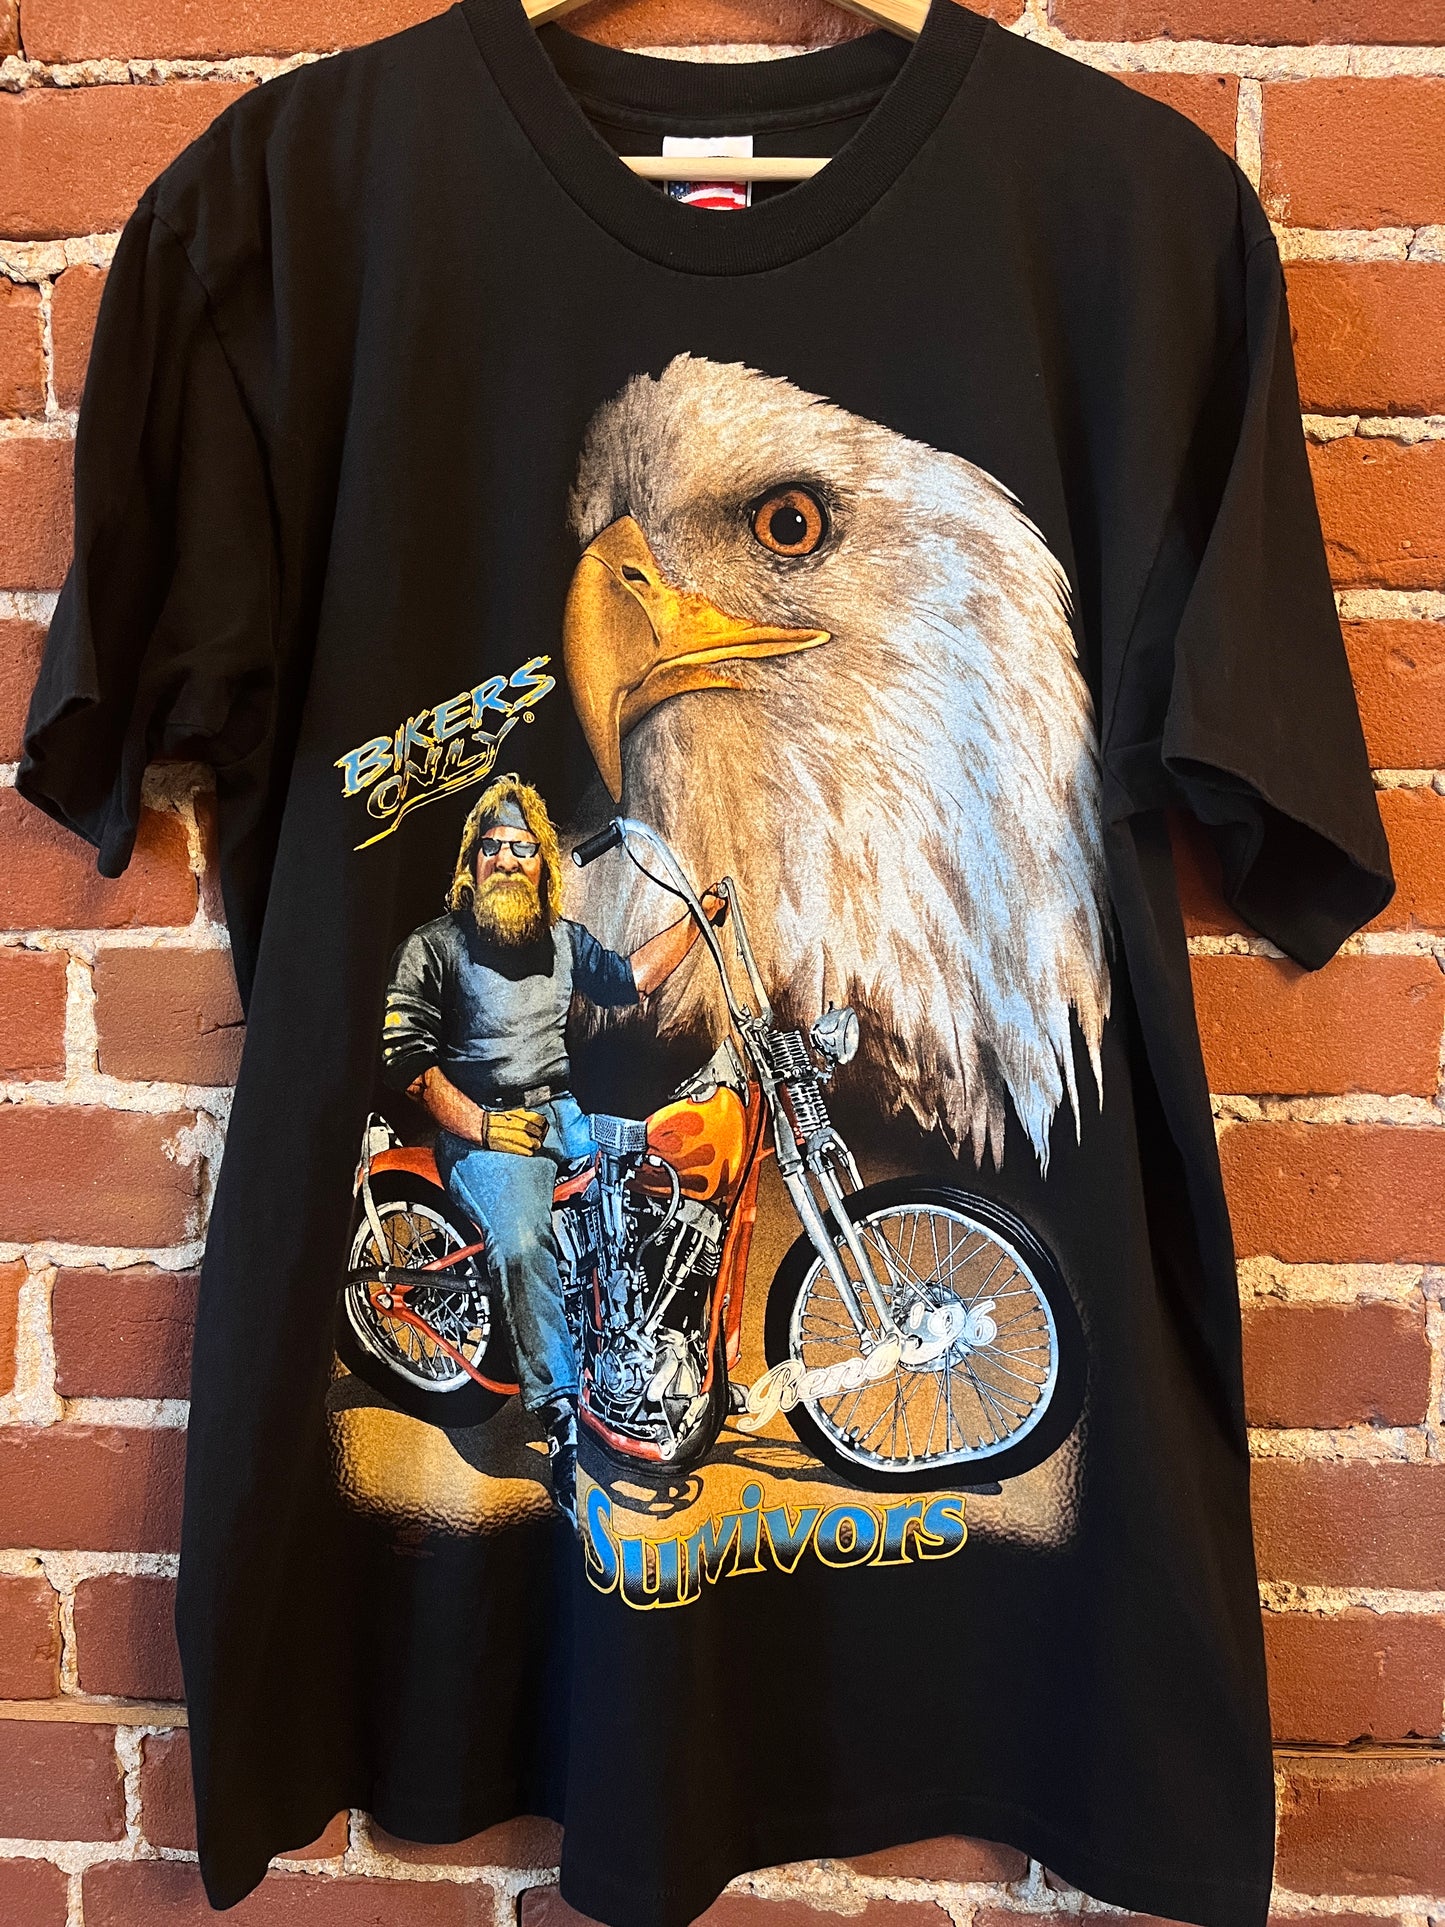 Bikers Only Survivors Eagle graphic Reno '96